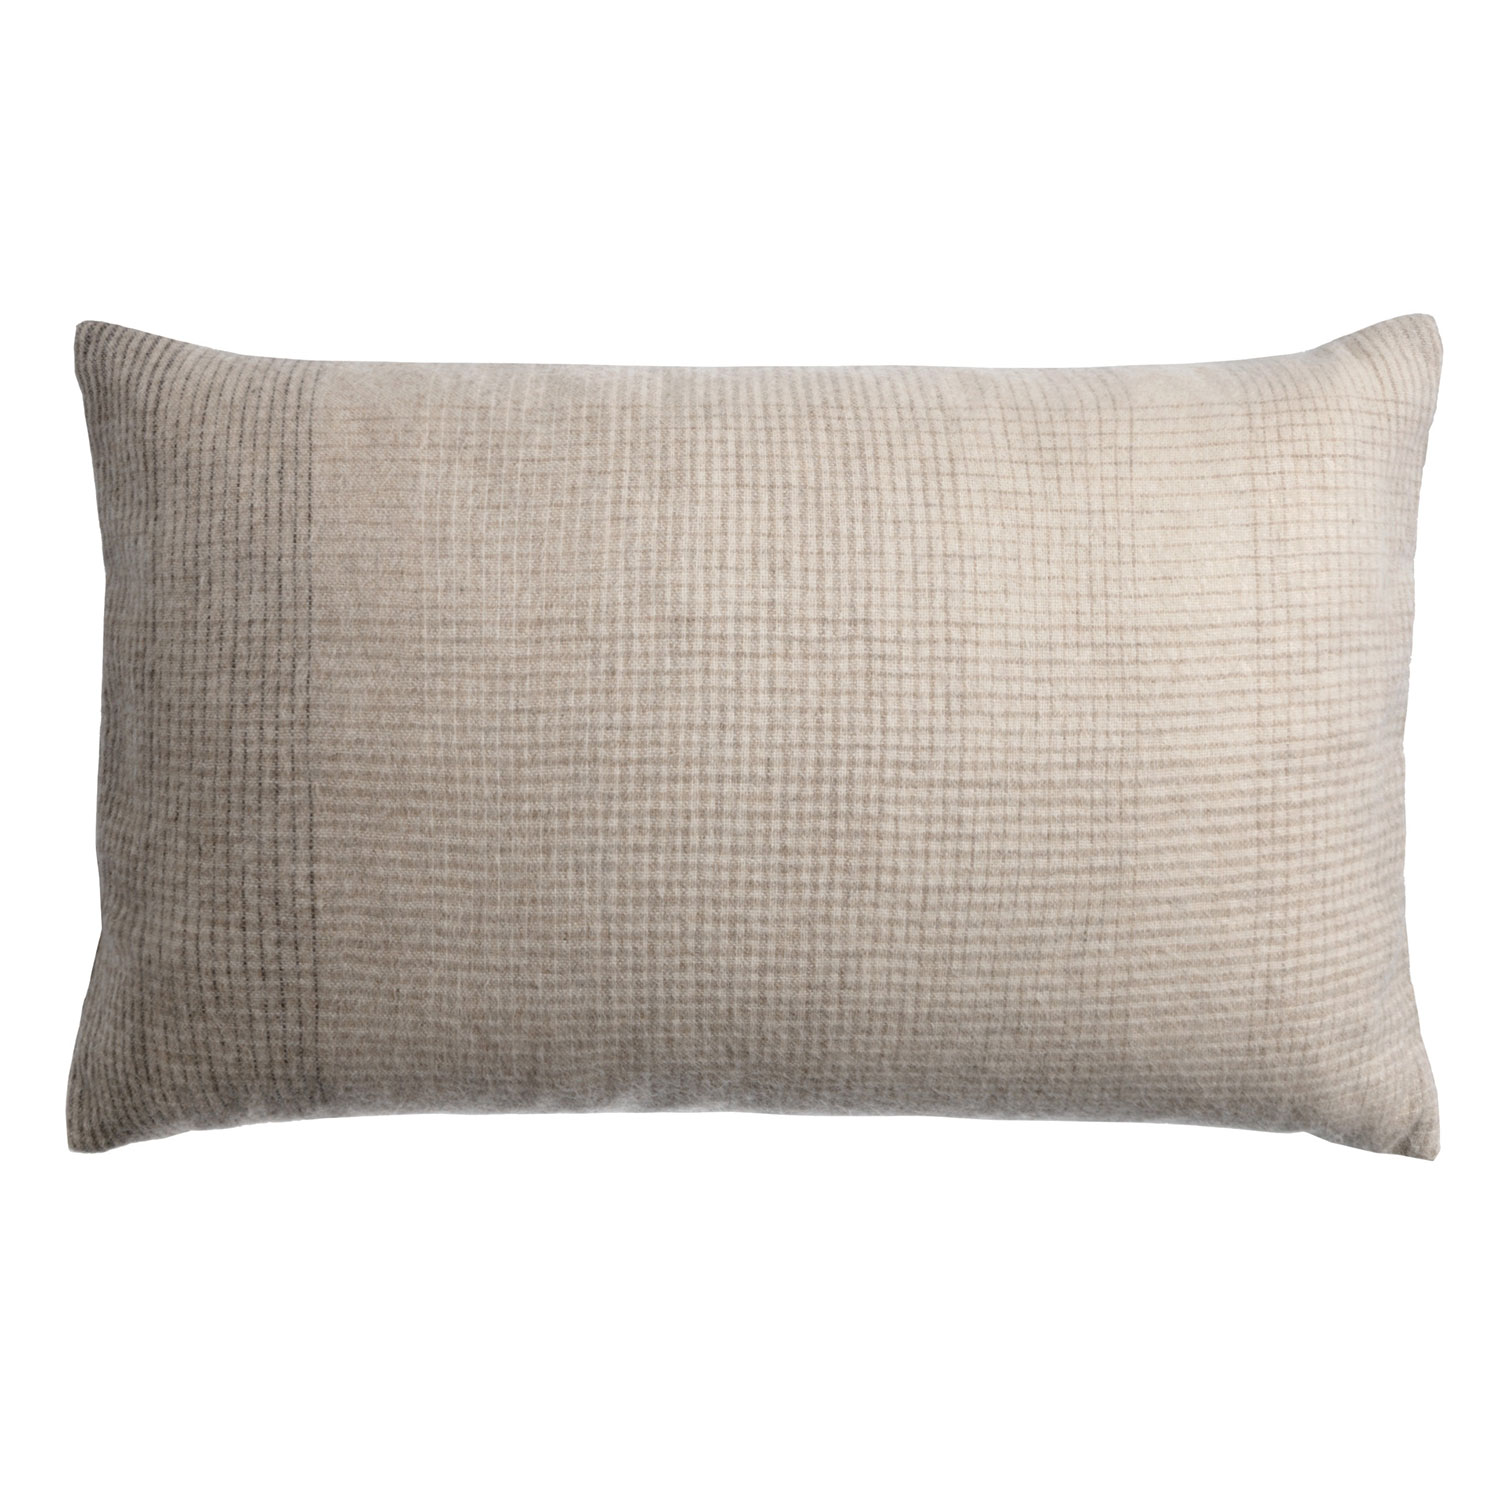 Horizon Cushion 40x60cm, Brown - Elvang - Elvang - RoyalDesign.com